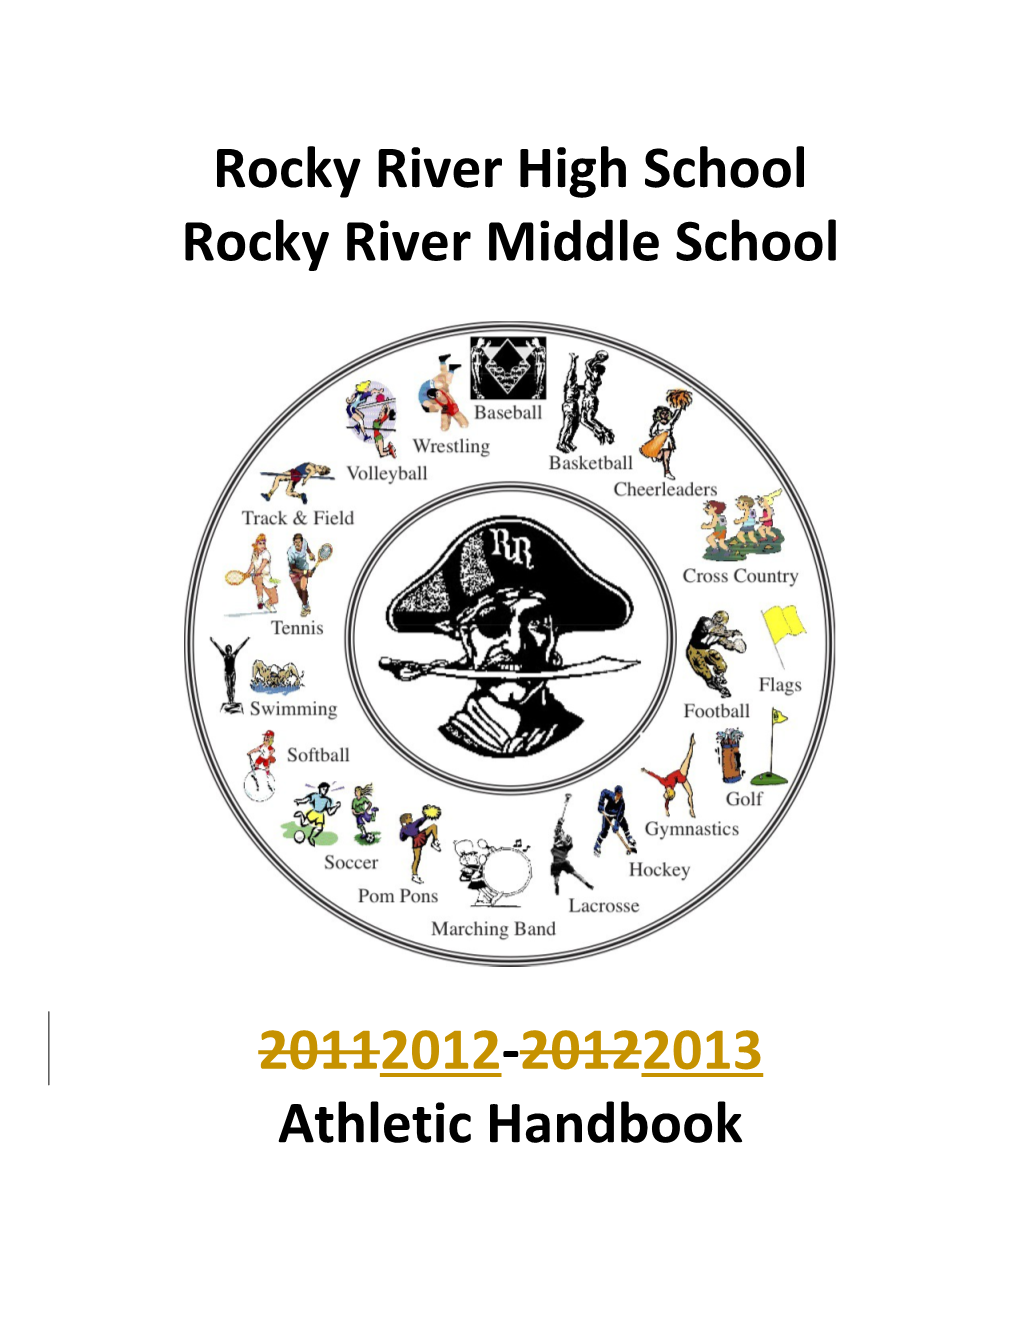 Rocky River City School District